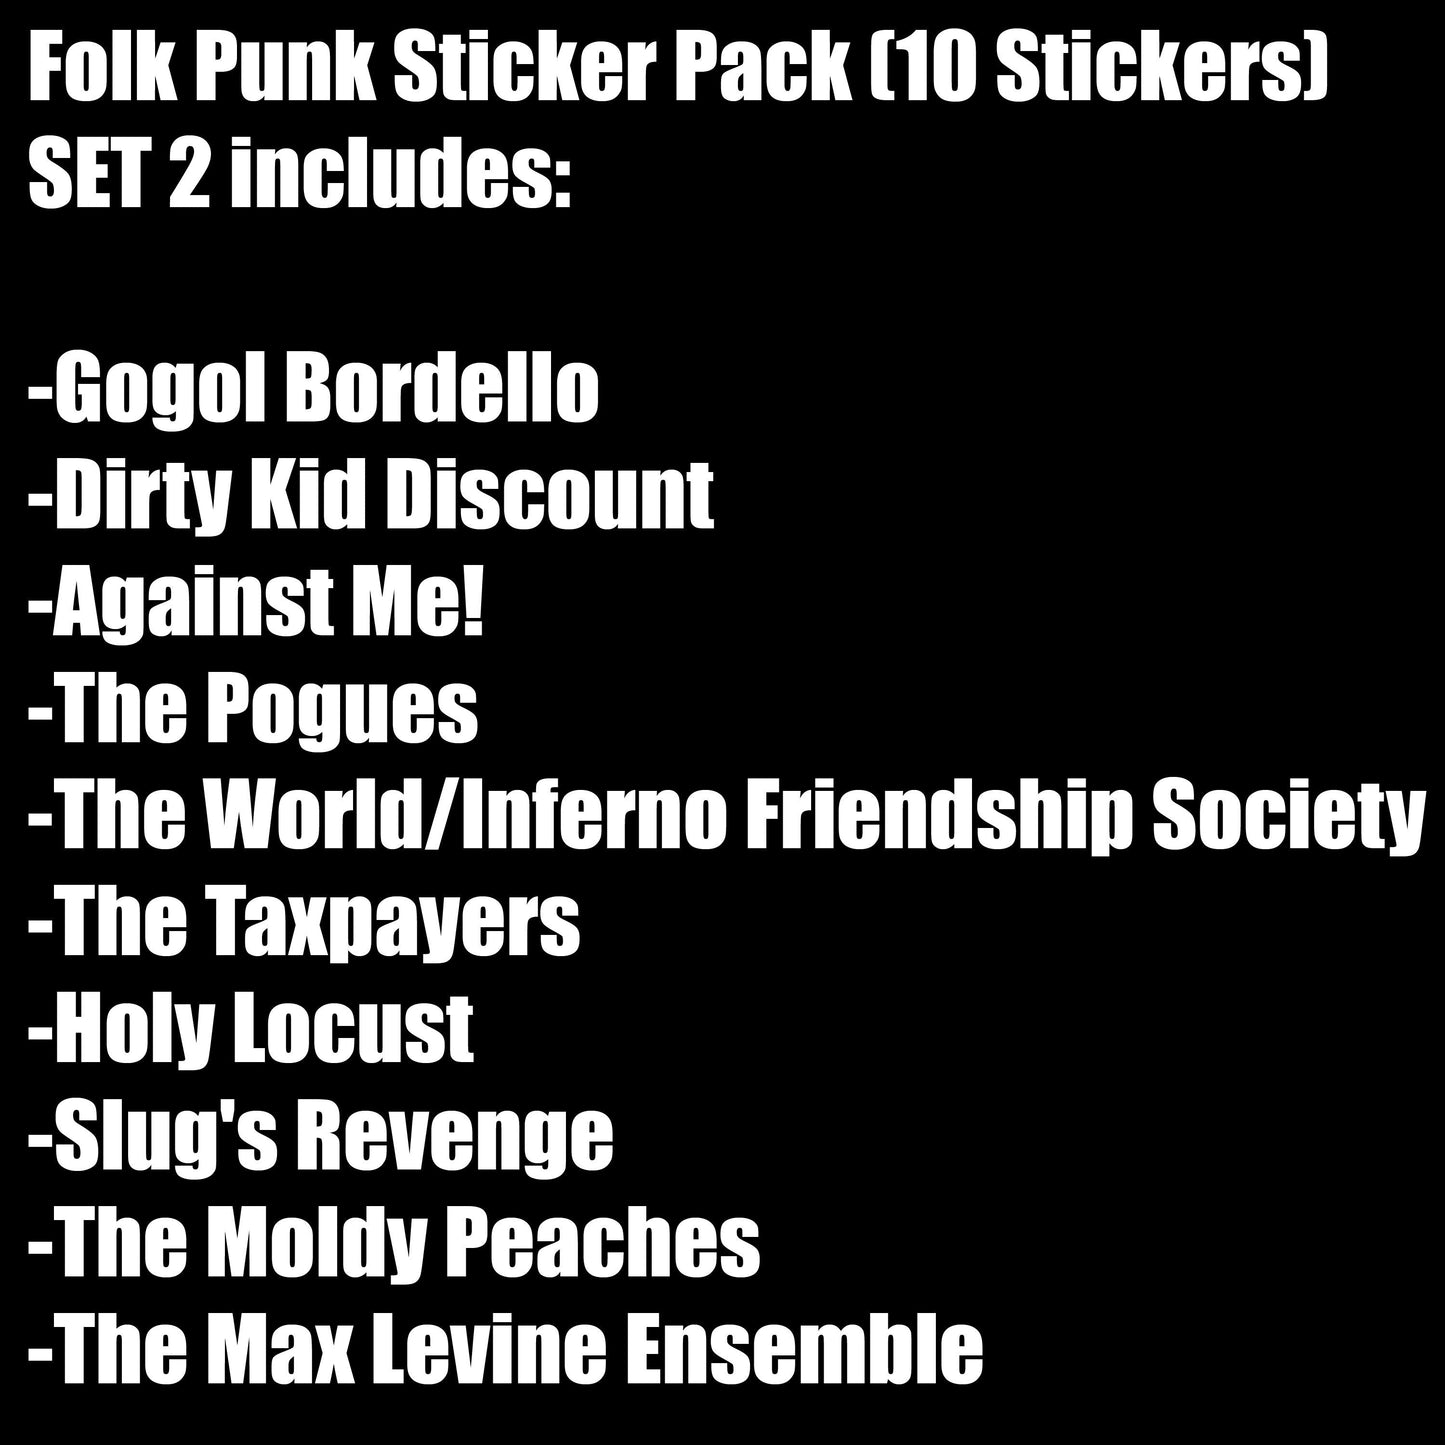 Folk Punk Sticker Pack (10 Stickers) Set 2